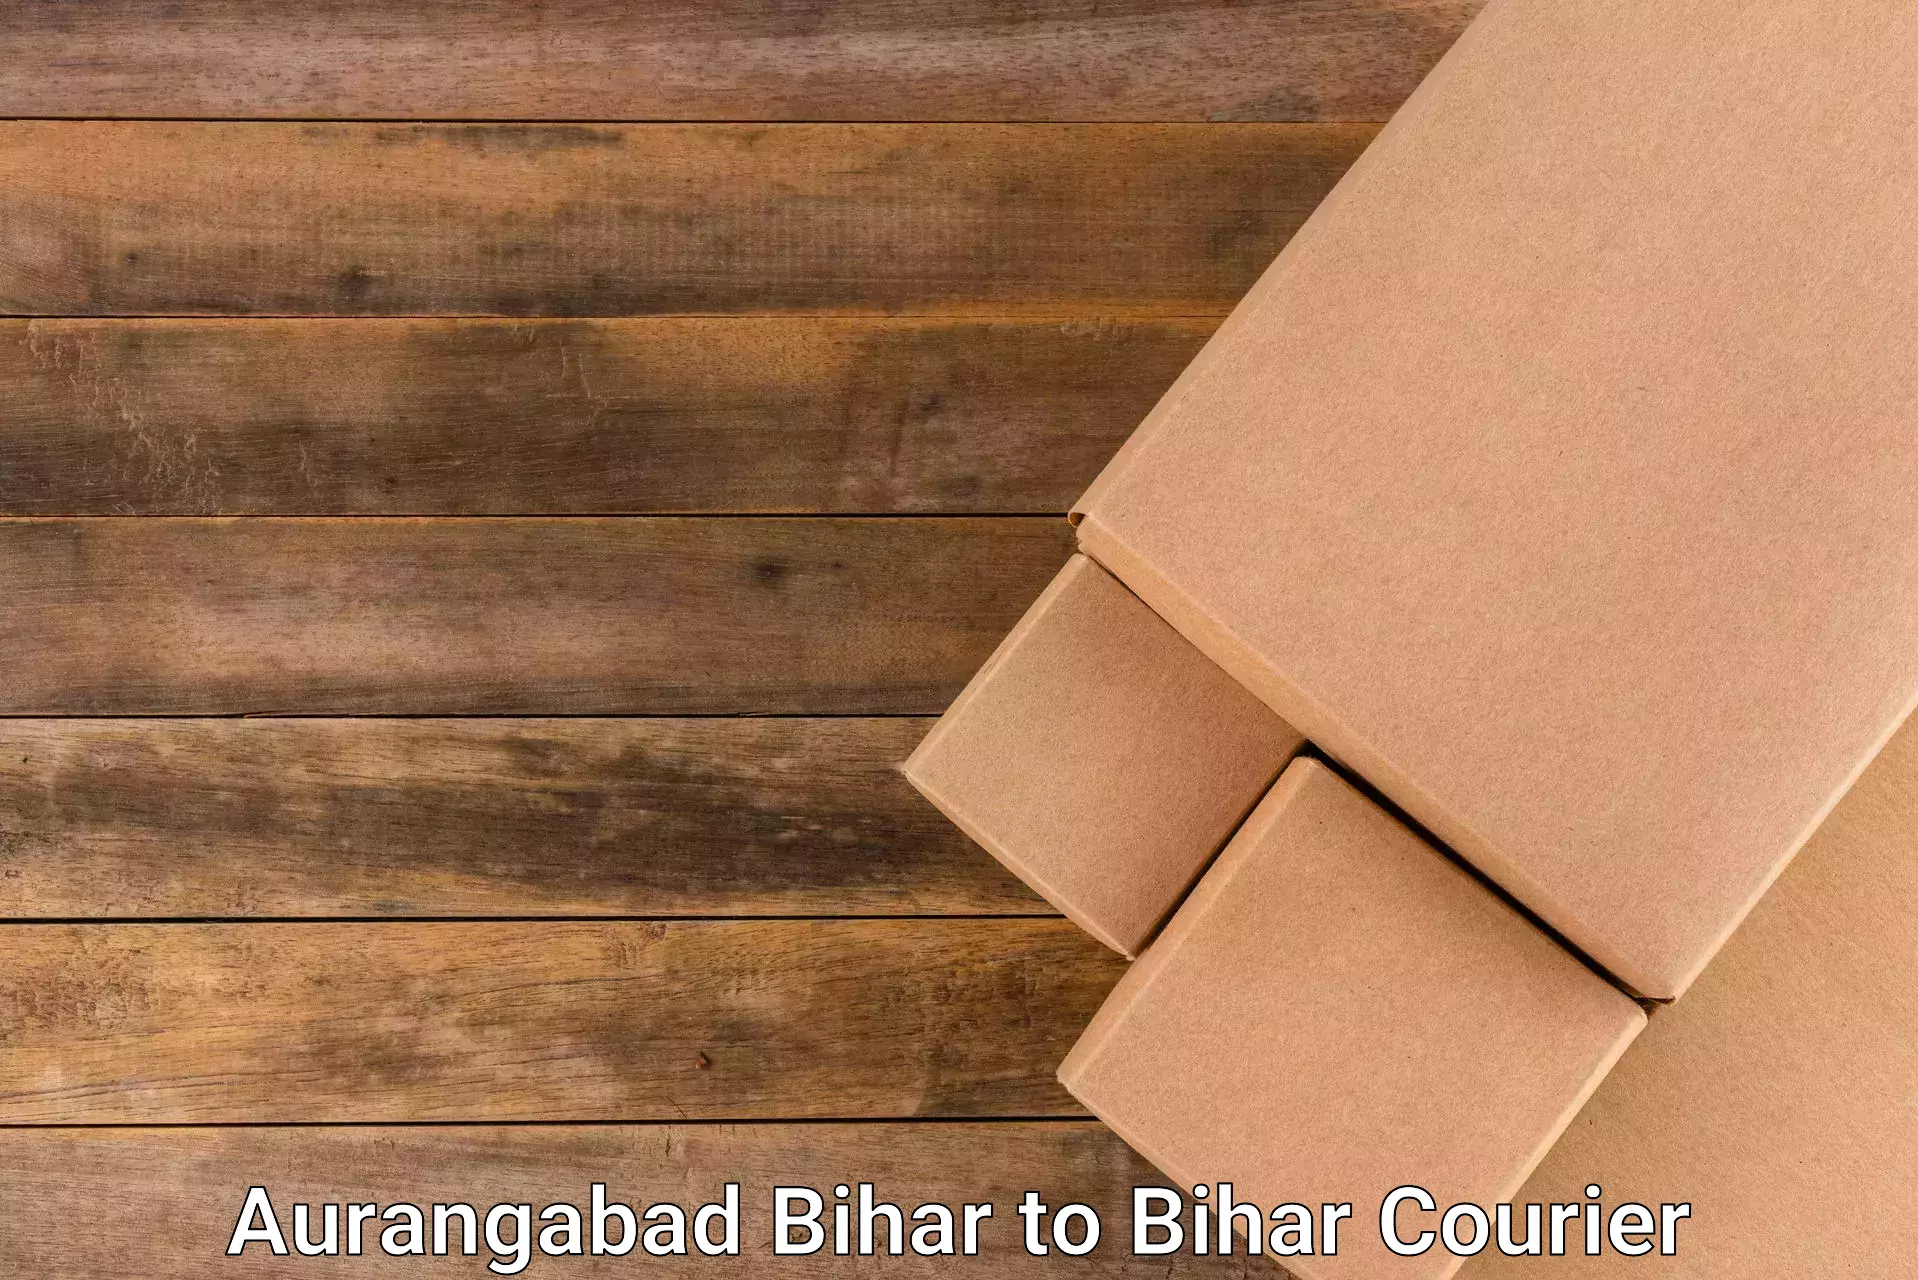 Residential courier service Aurangabad Bihar to Barhiya